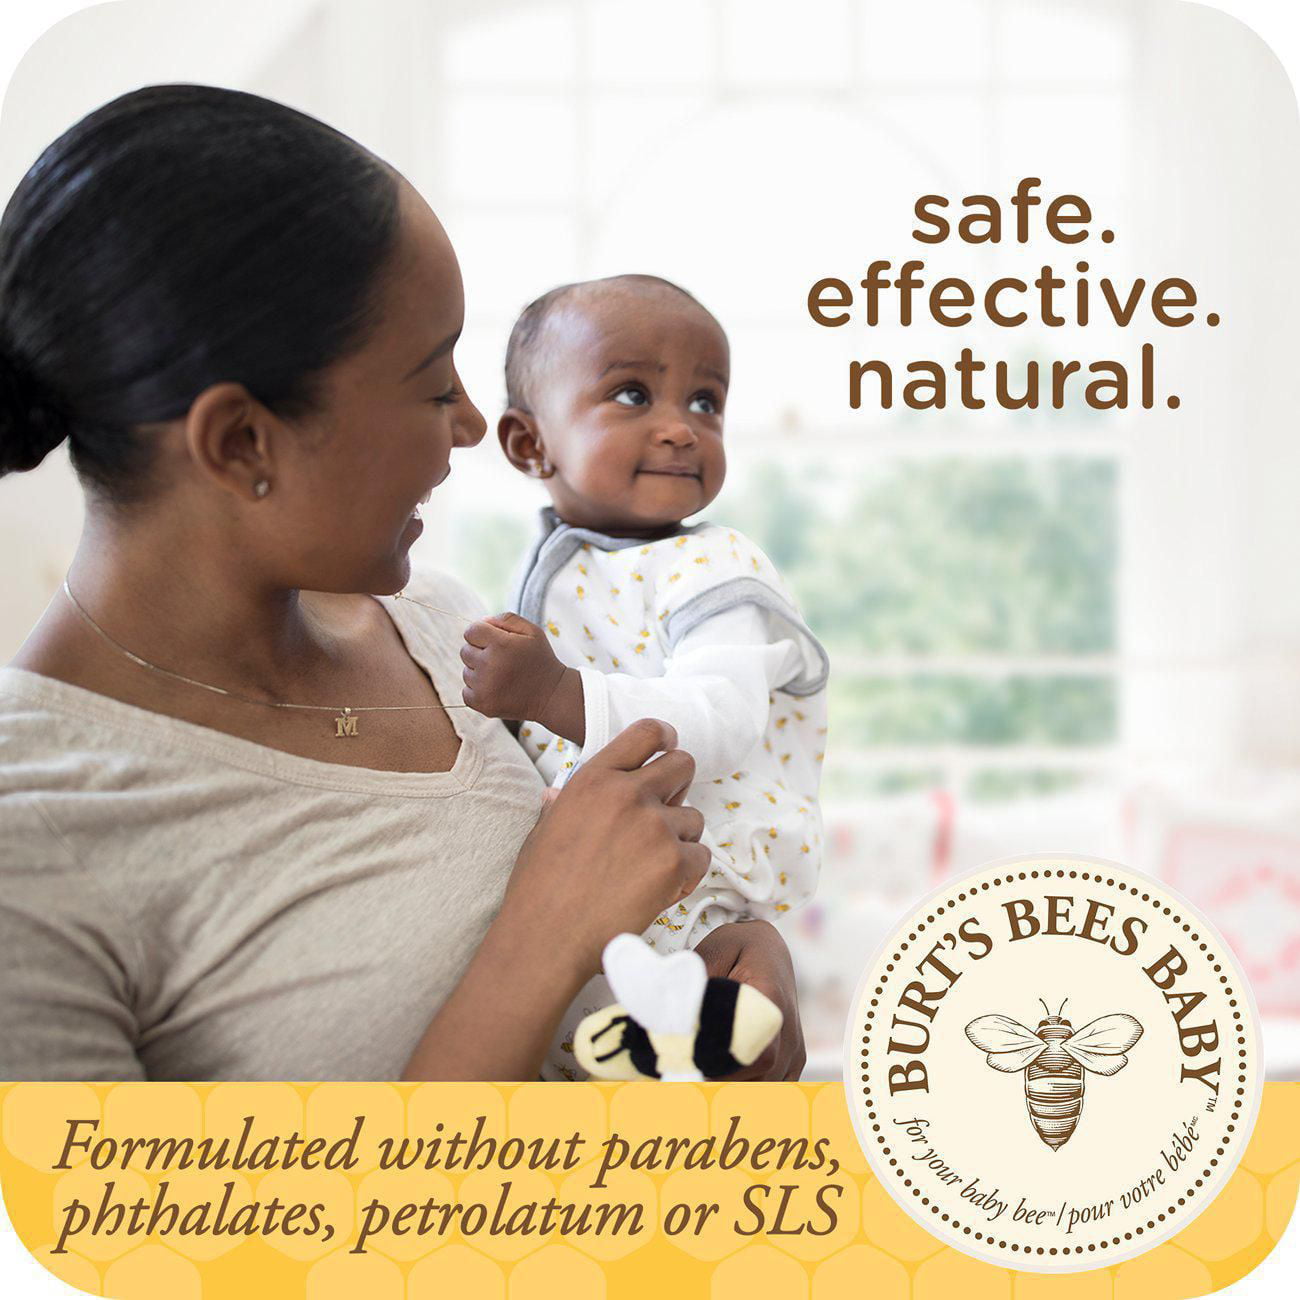 Burt's Bees Original Tear Free Pediatrician Tested Baby Shampoo and Wash -  12 Fl. Oz. - Vons